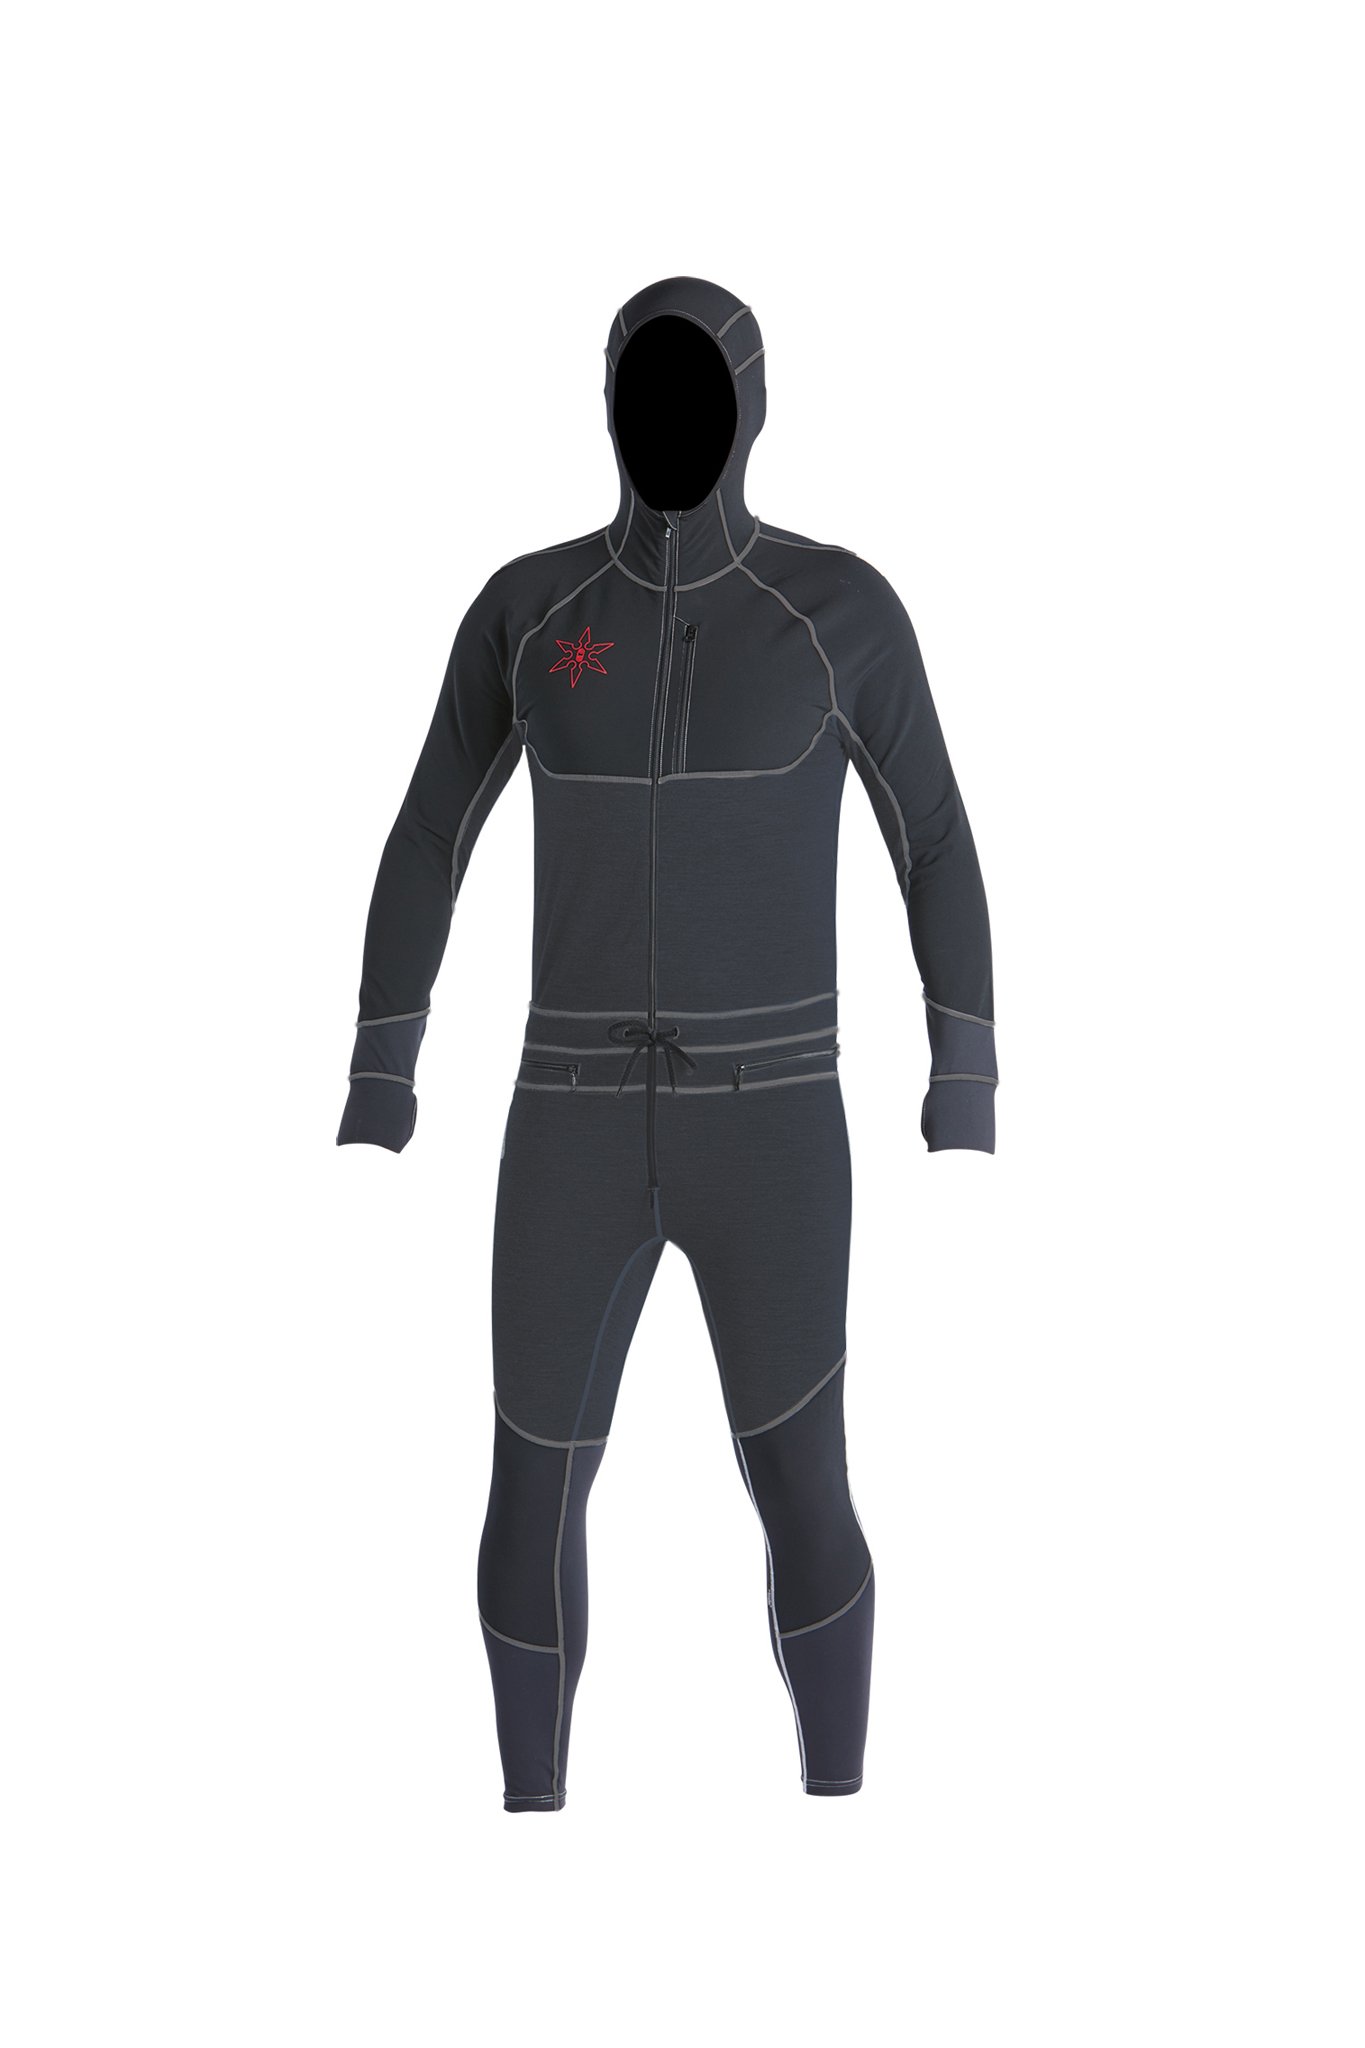 Airblaster Ninja Suit Pro thermopak triple black